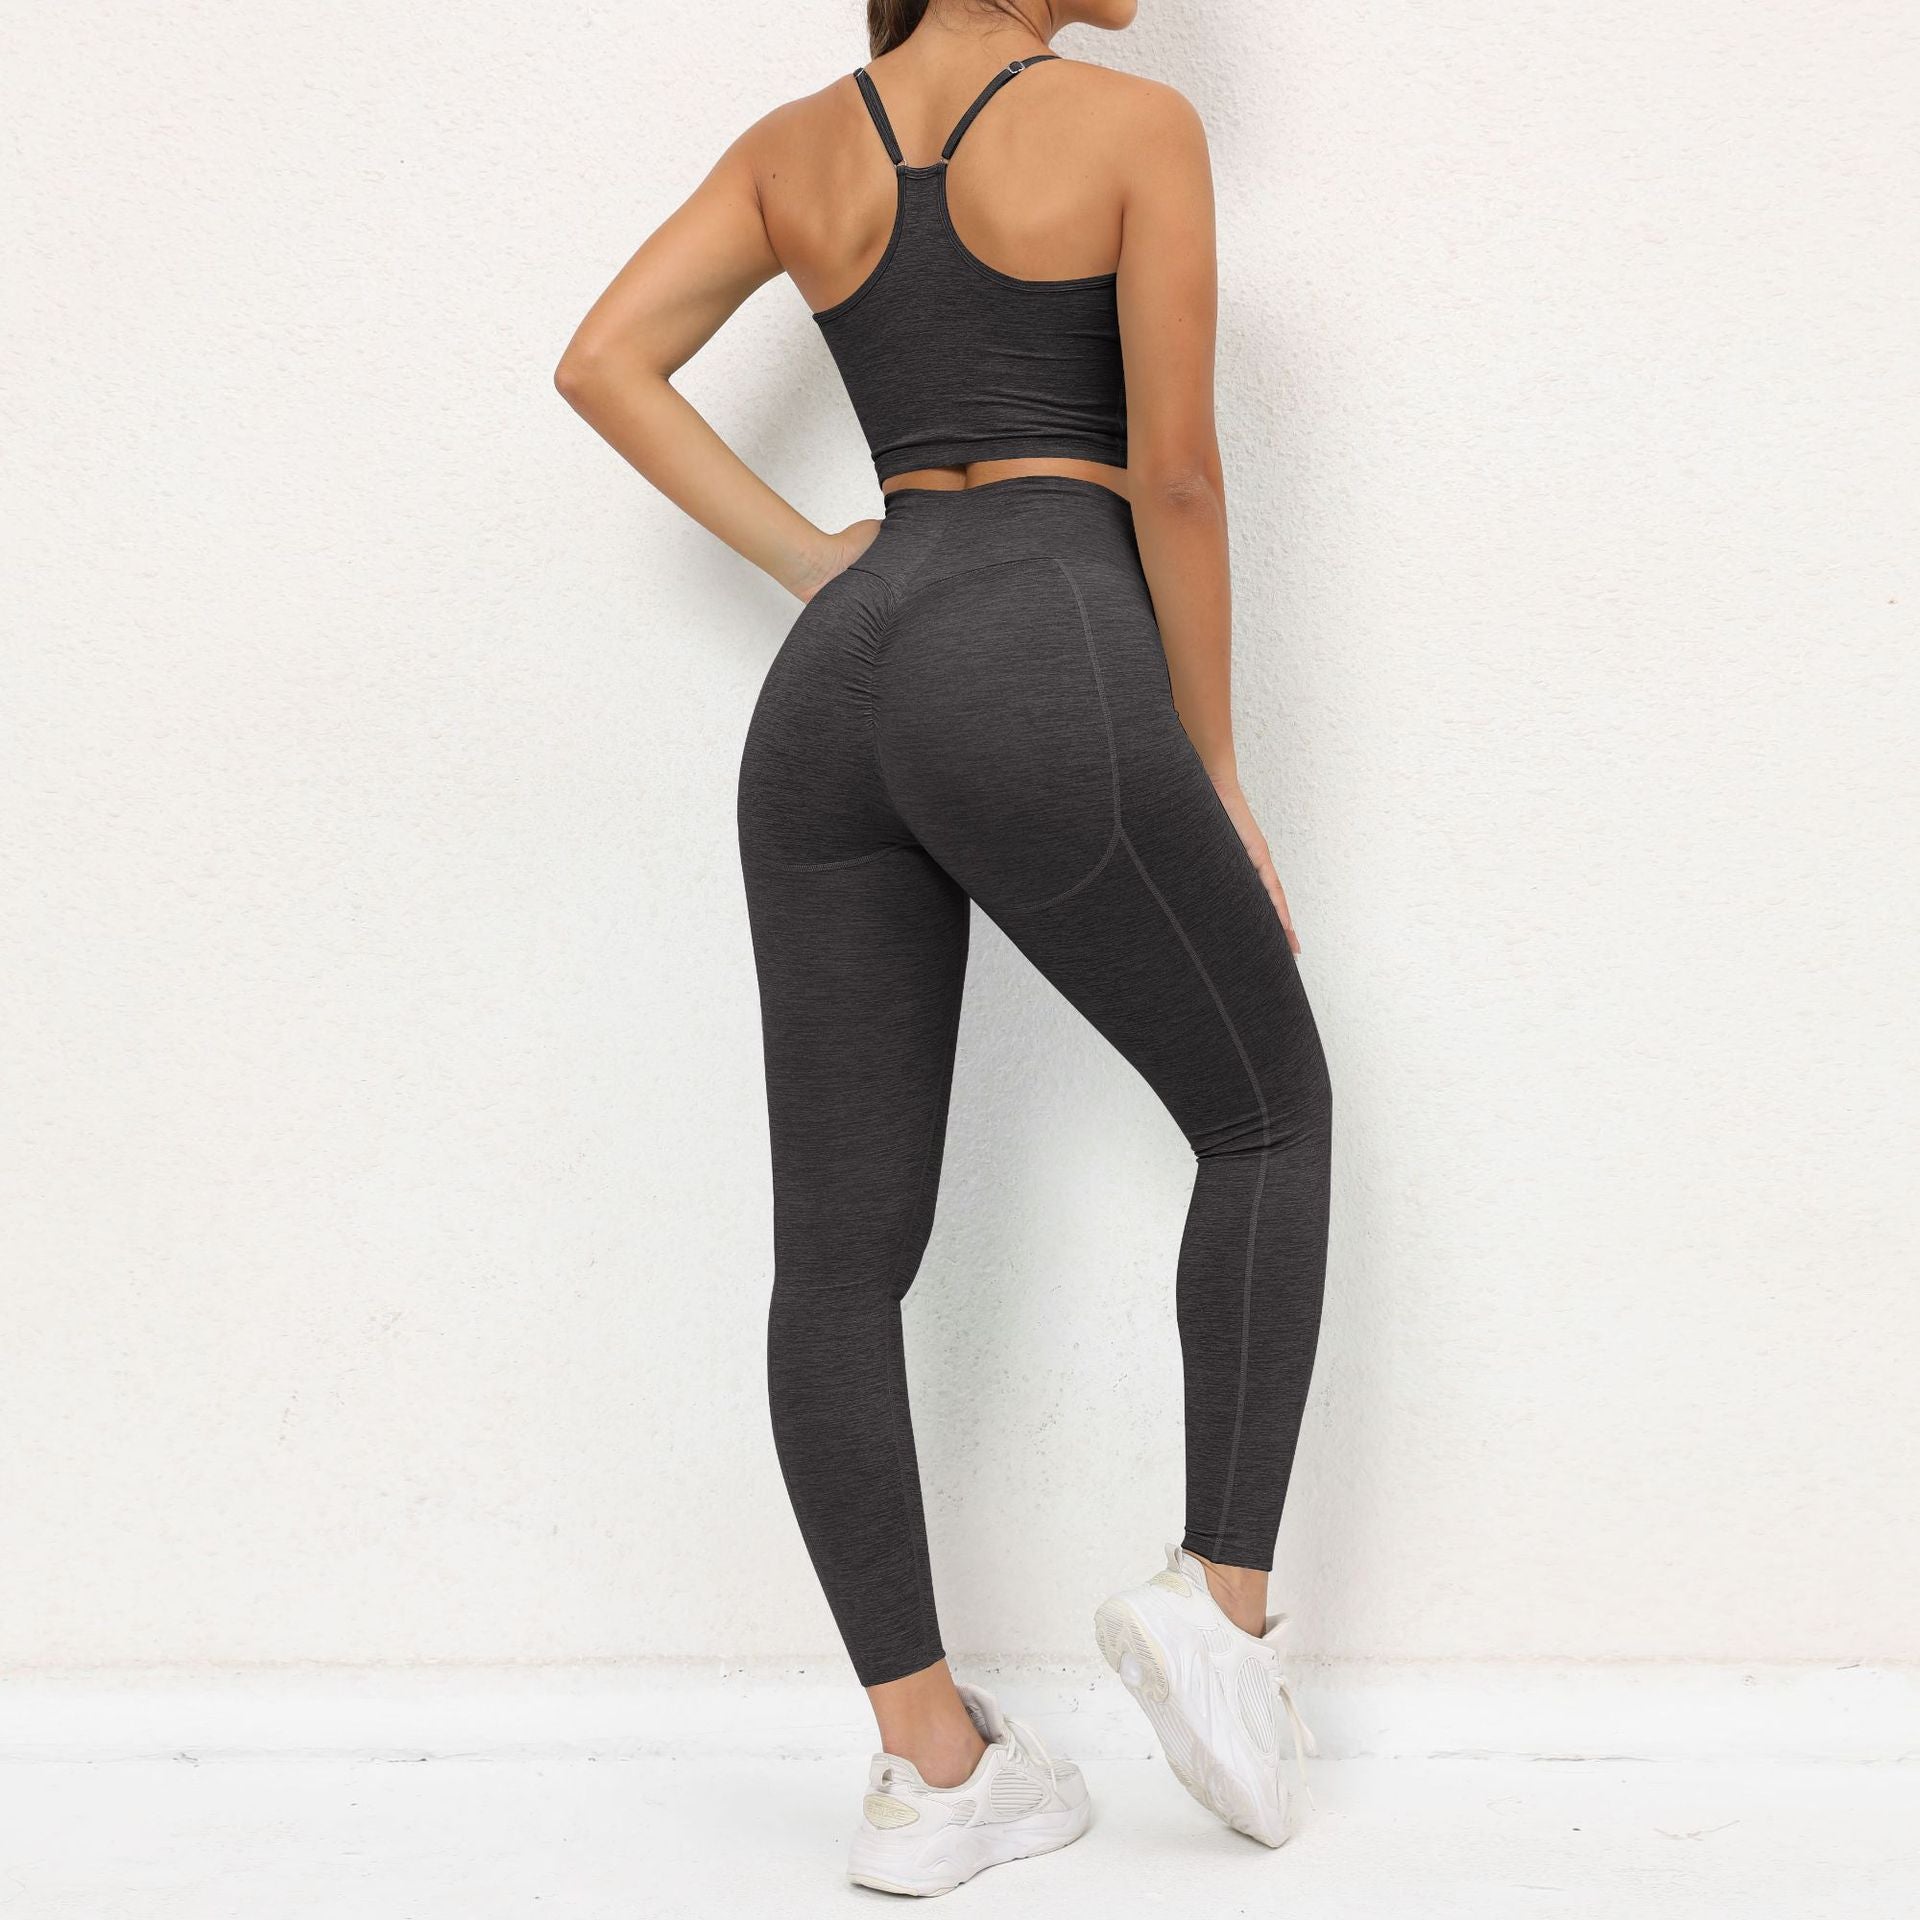 Wendy  Running Sports  Anti-shock Wrinkle Yoga Suit